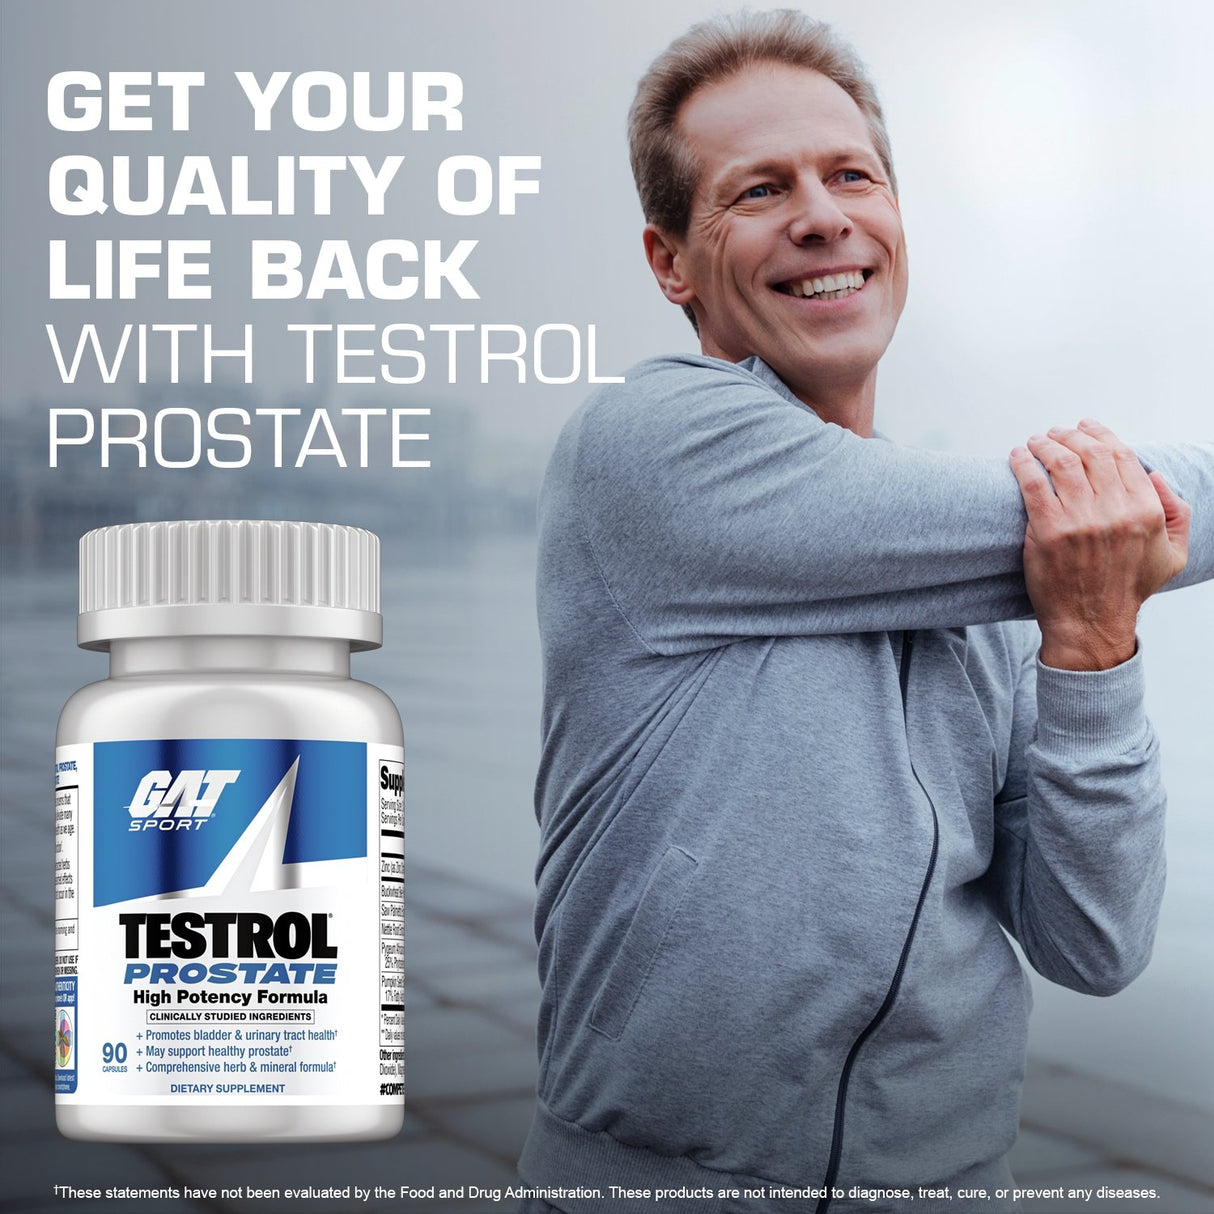 GAT SPORT Testrol Prostate - quality of life